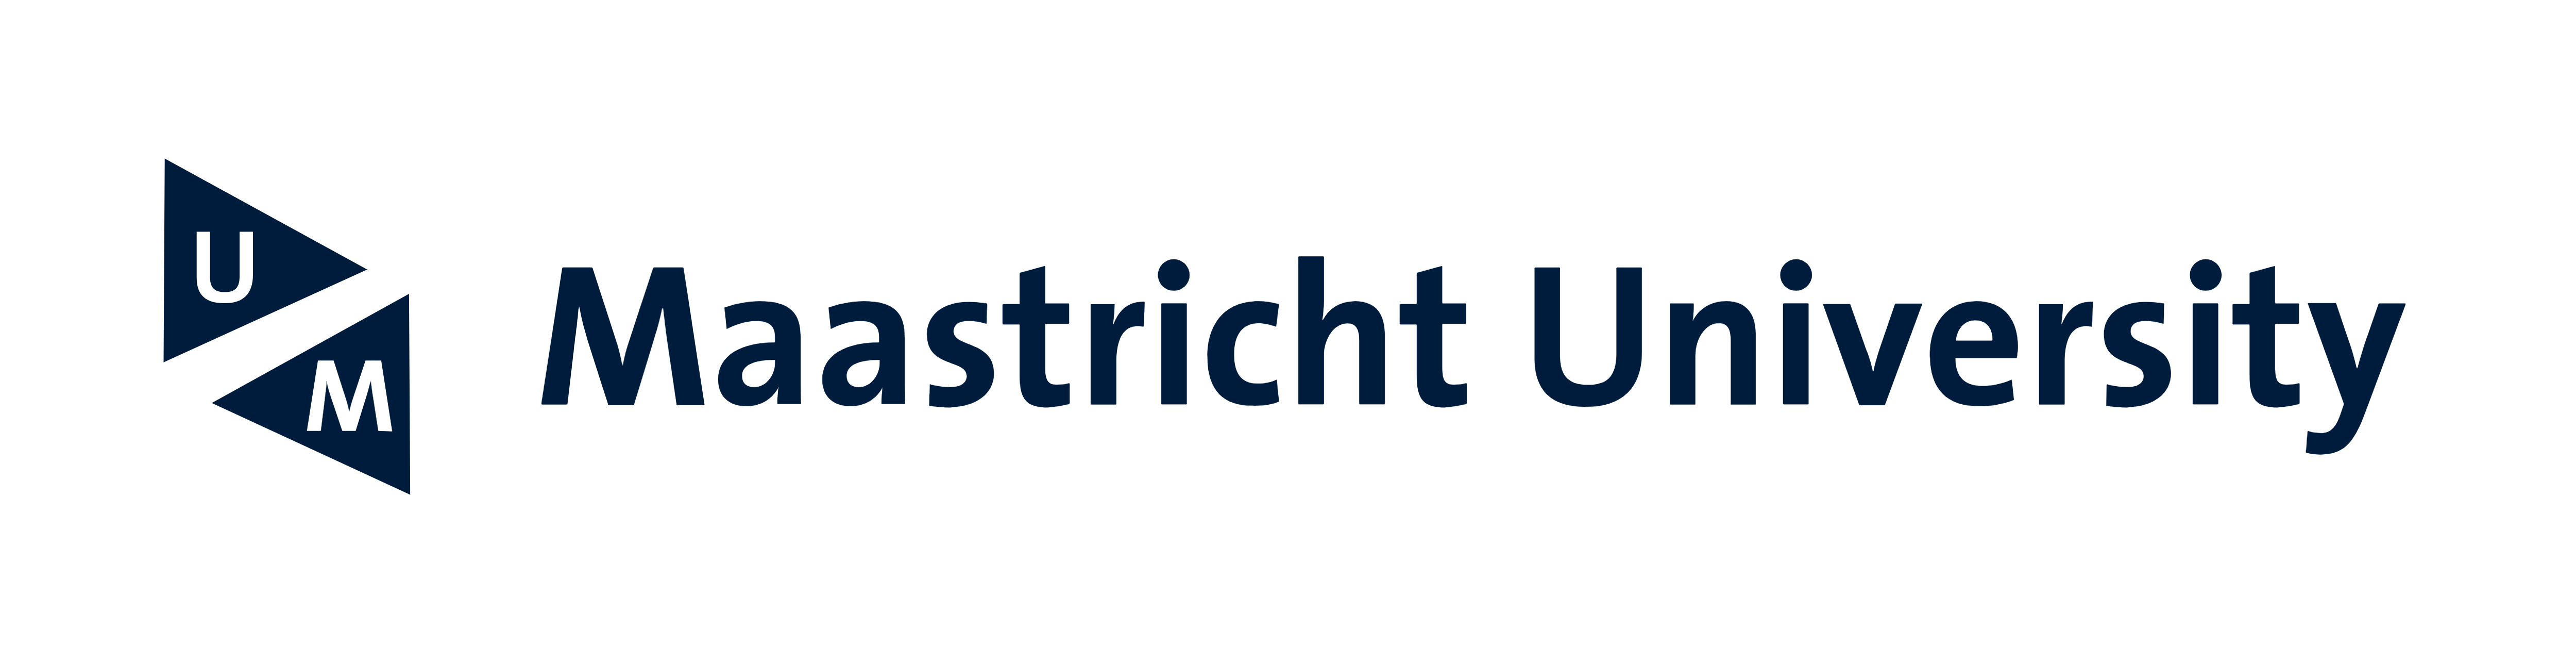 maastricht-university-cstories-nl-business-storytelling